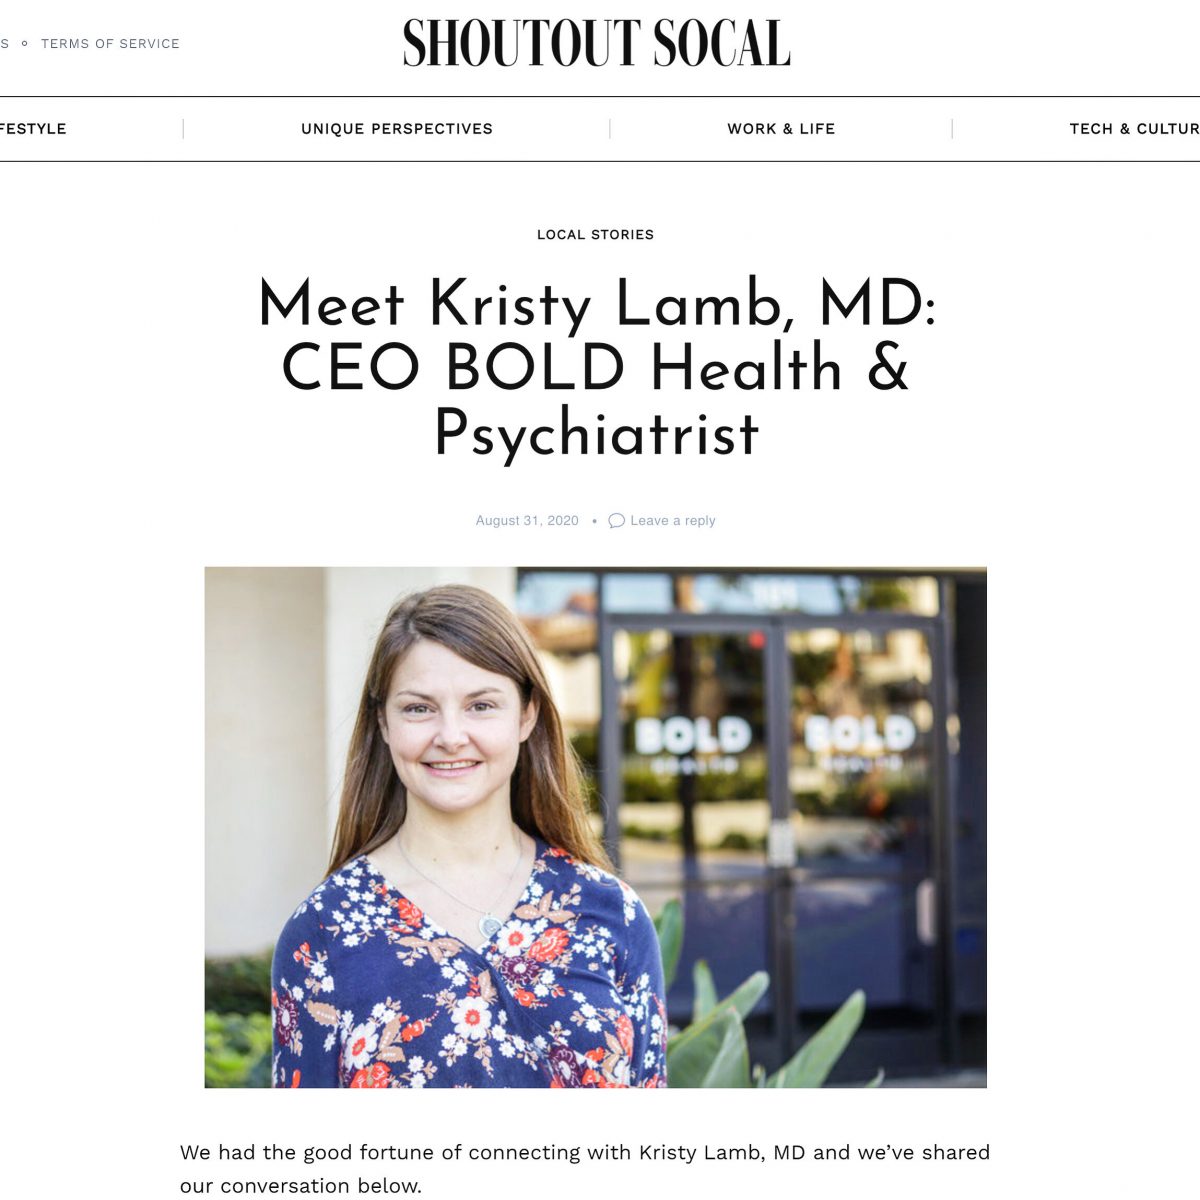 Shoutout Social - Meet Kristy Lamb, MD